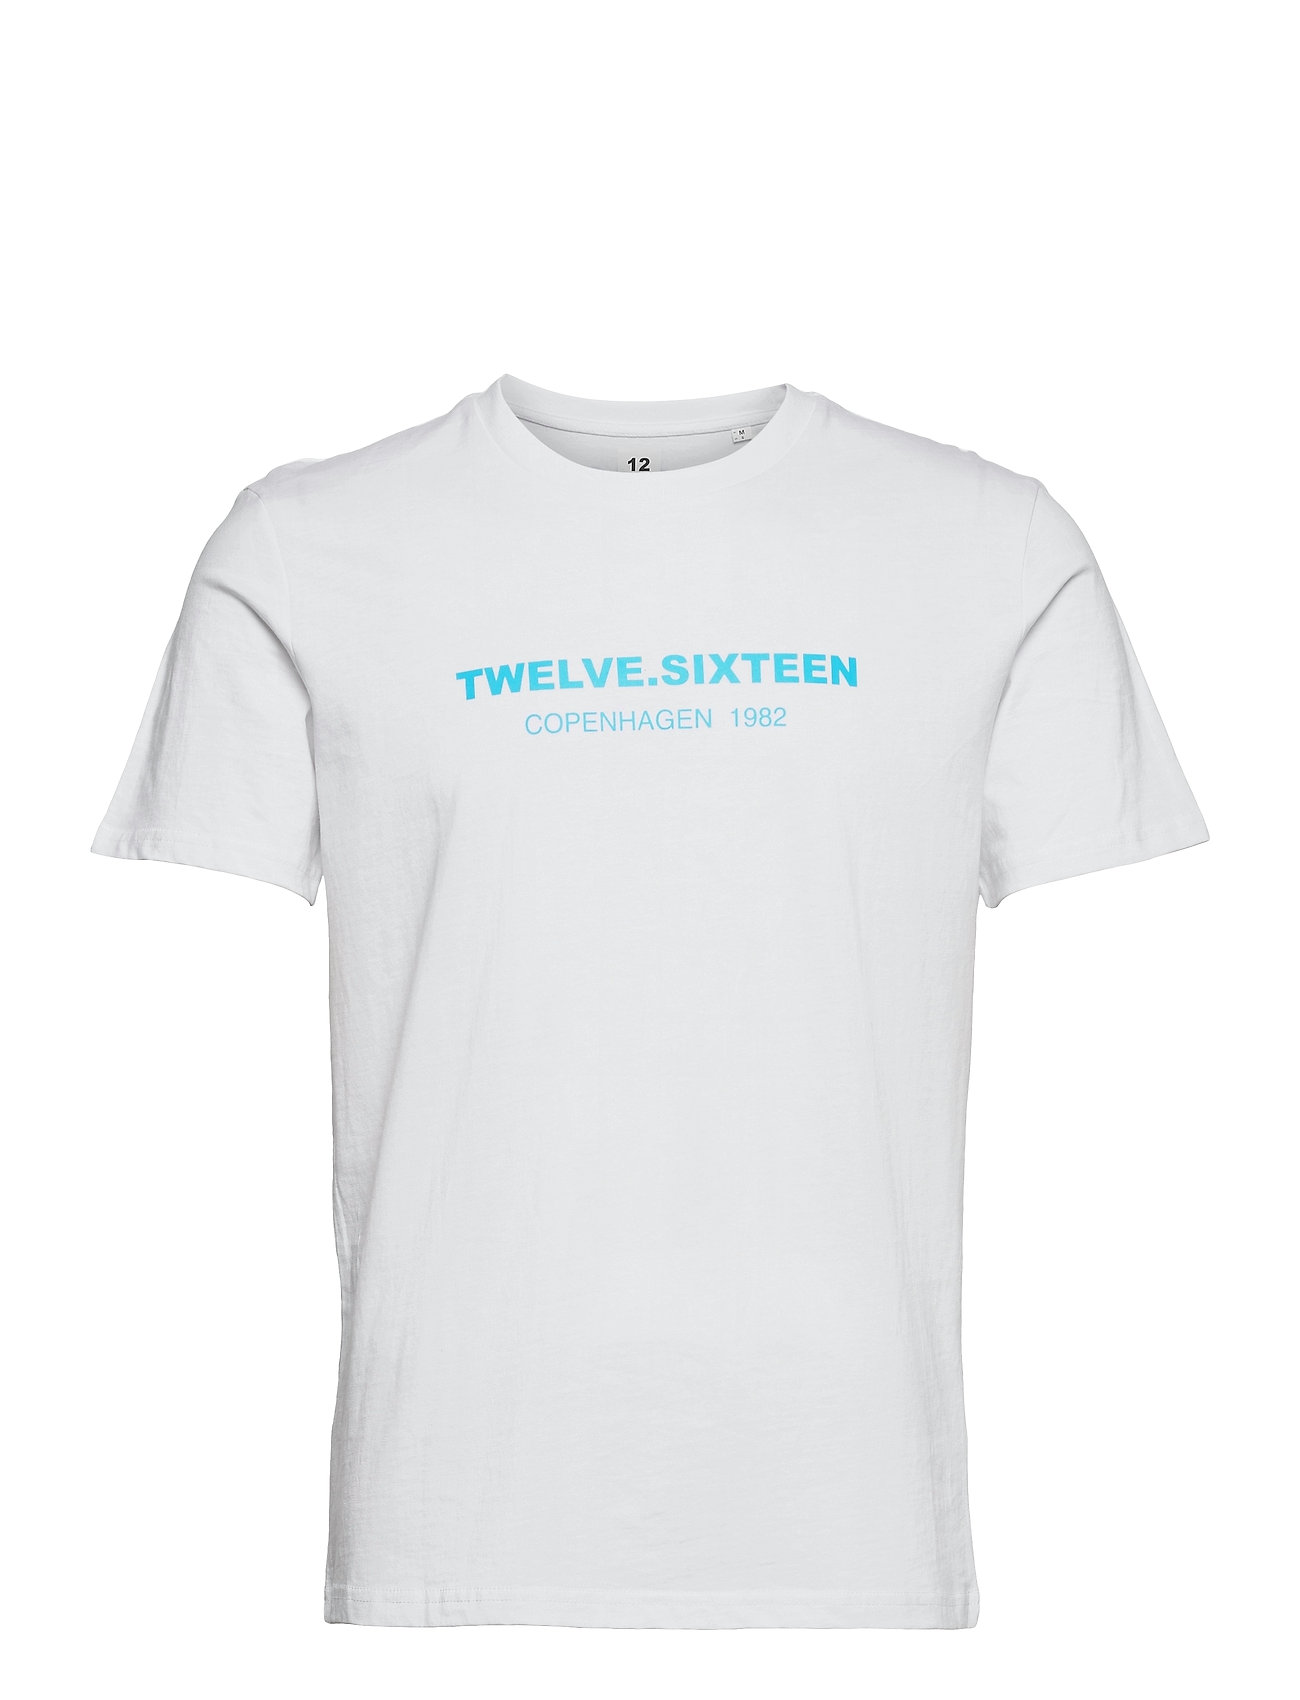 Tee S/S T-shirts Short-sleeved Valkoinen Twelve Sixteen